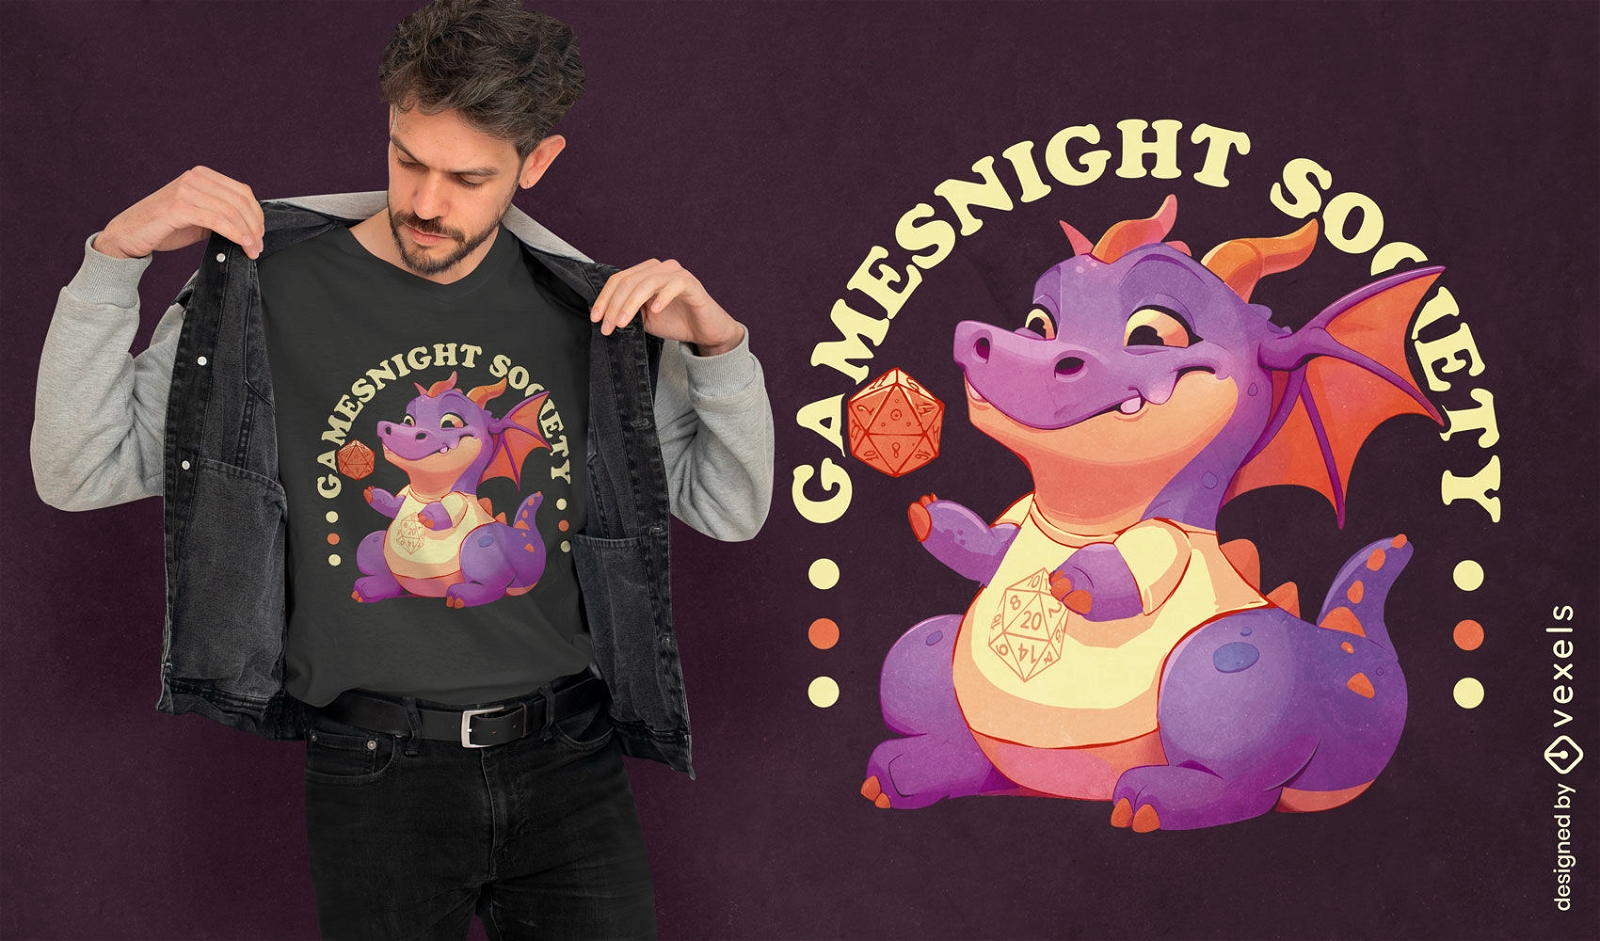 Gamesnight society t-shirt design